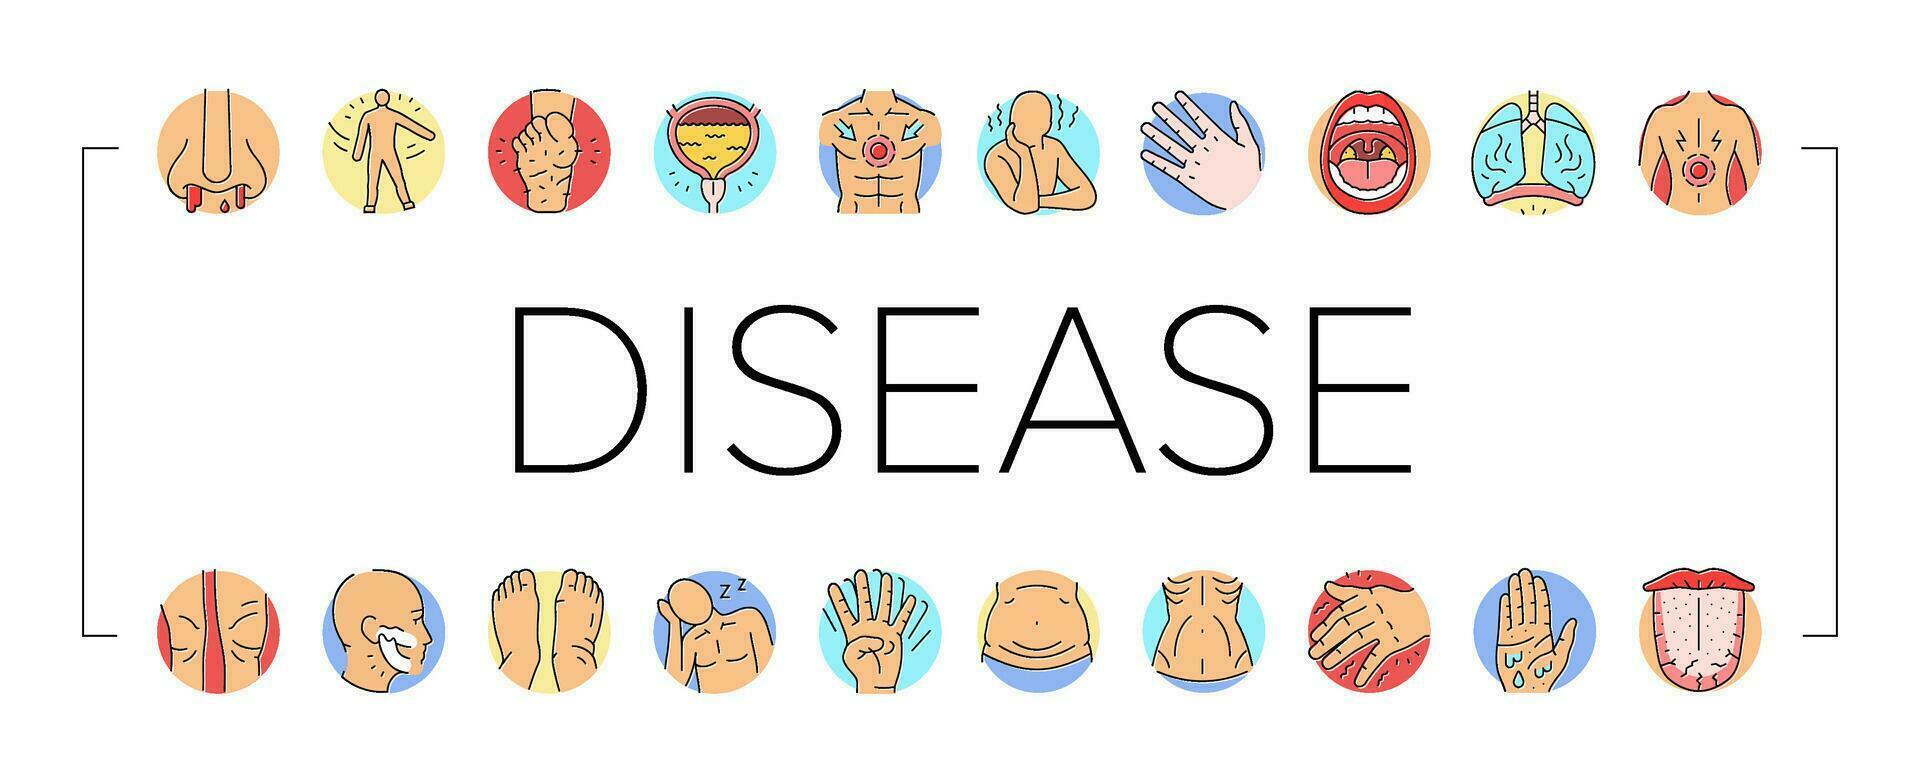 disease symptom health icons set vector